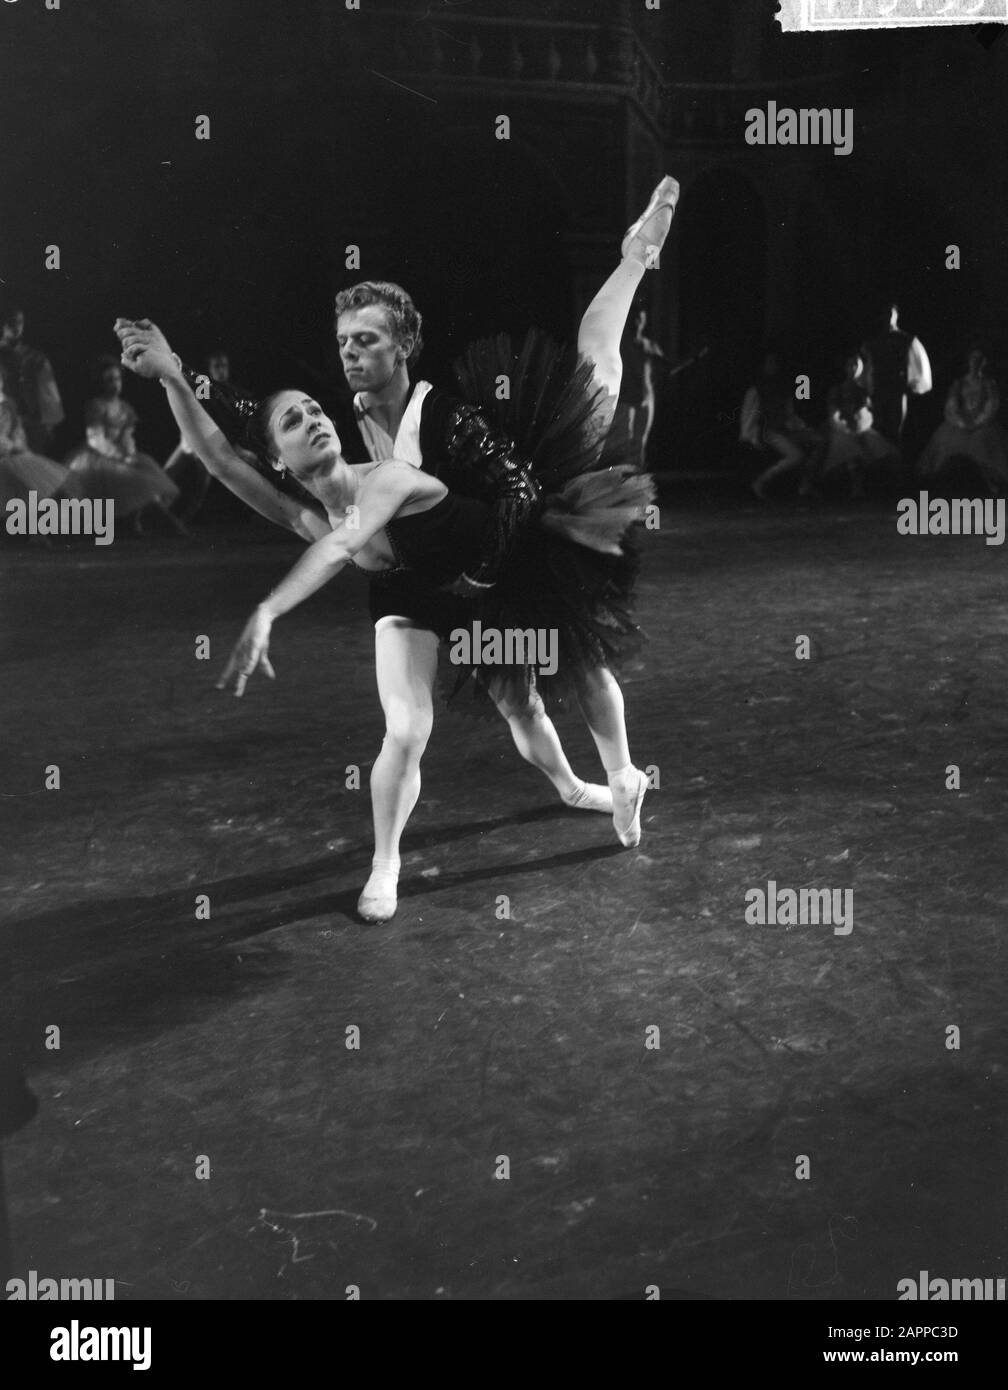 Premiere of Het Swan Lake by National Ballet in Apeldoorn, the Prince Simon  Andre and black swan Kathleen Smith Date: March 9, 1965 Location:  Apeldoorn, Gelderland Keywords: PREMIERESES, ballet Institution name:  National